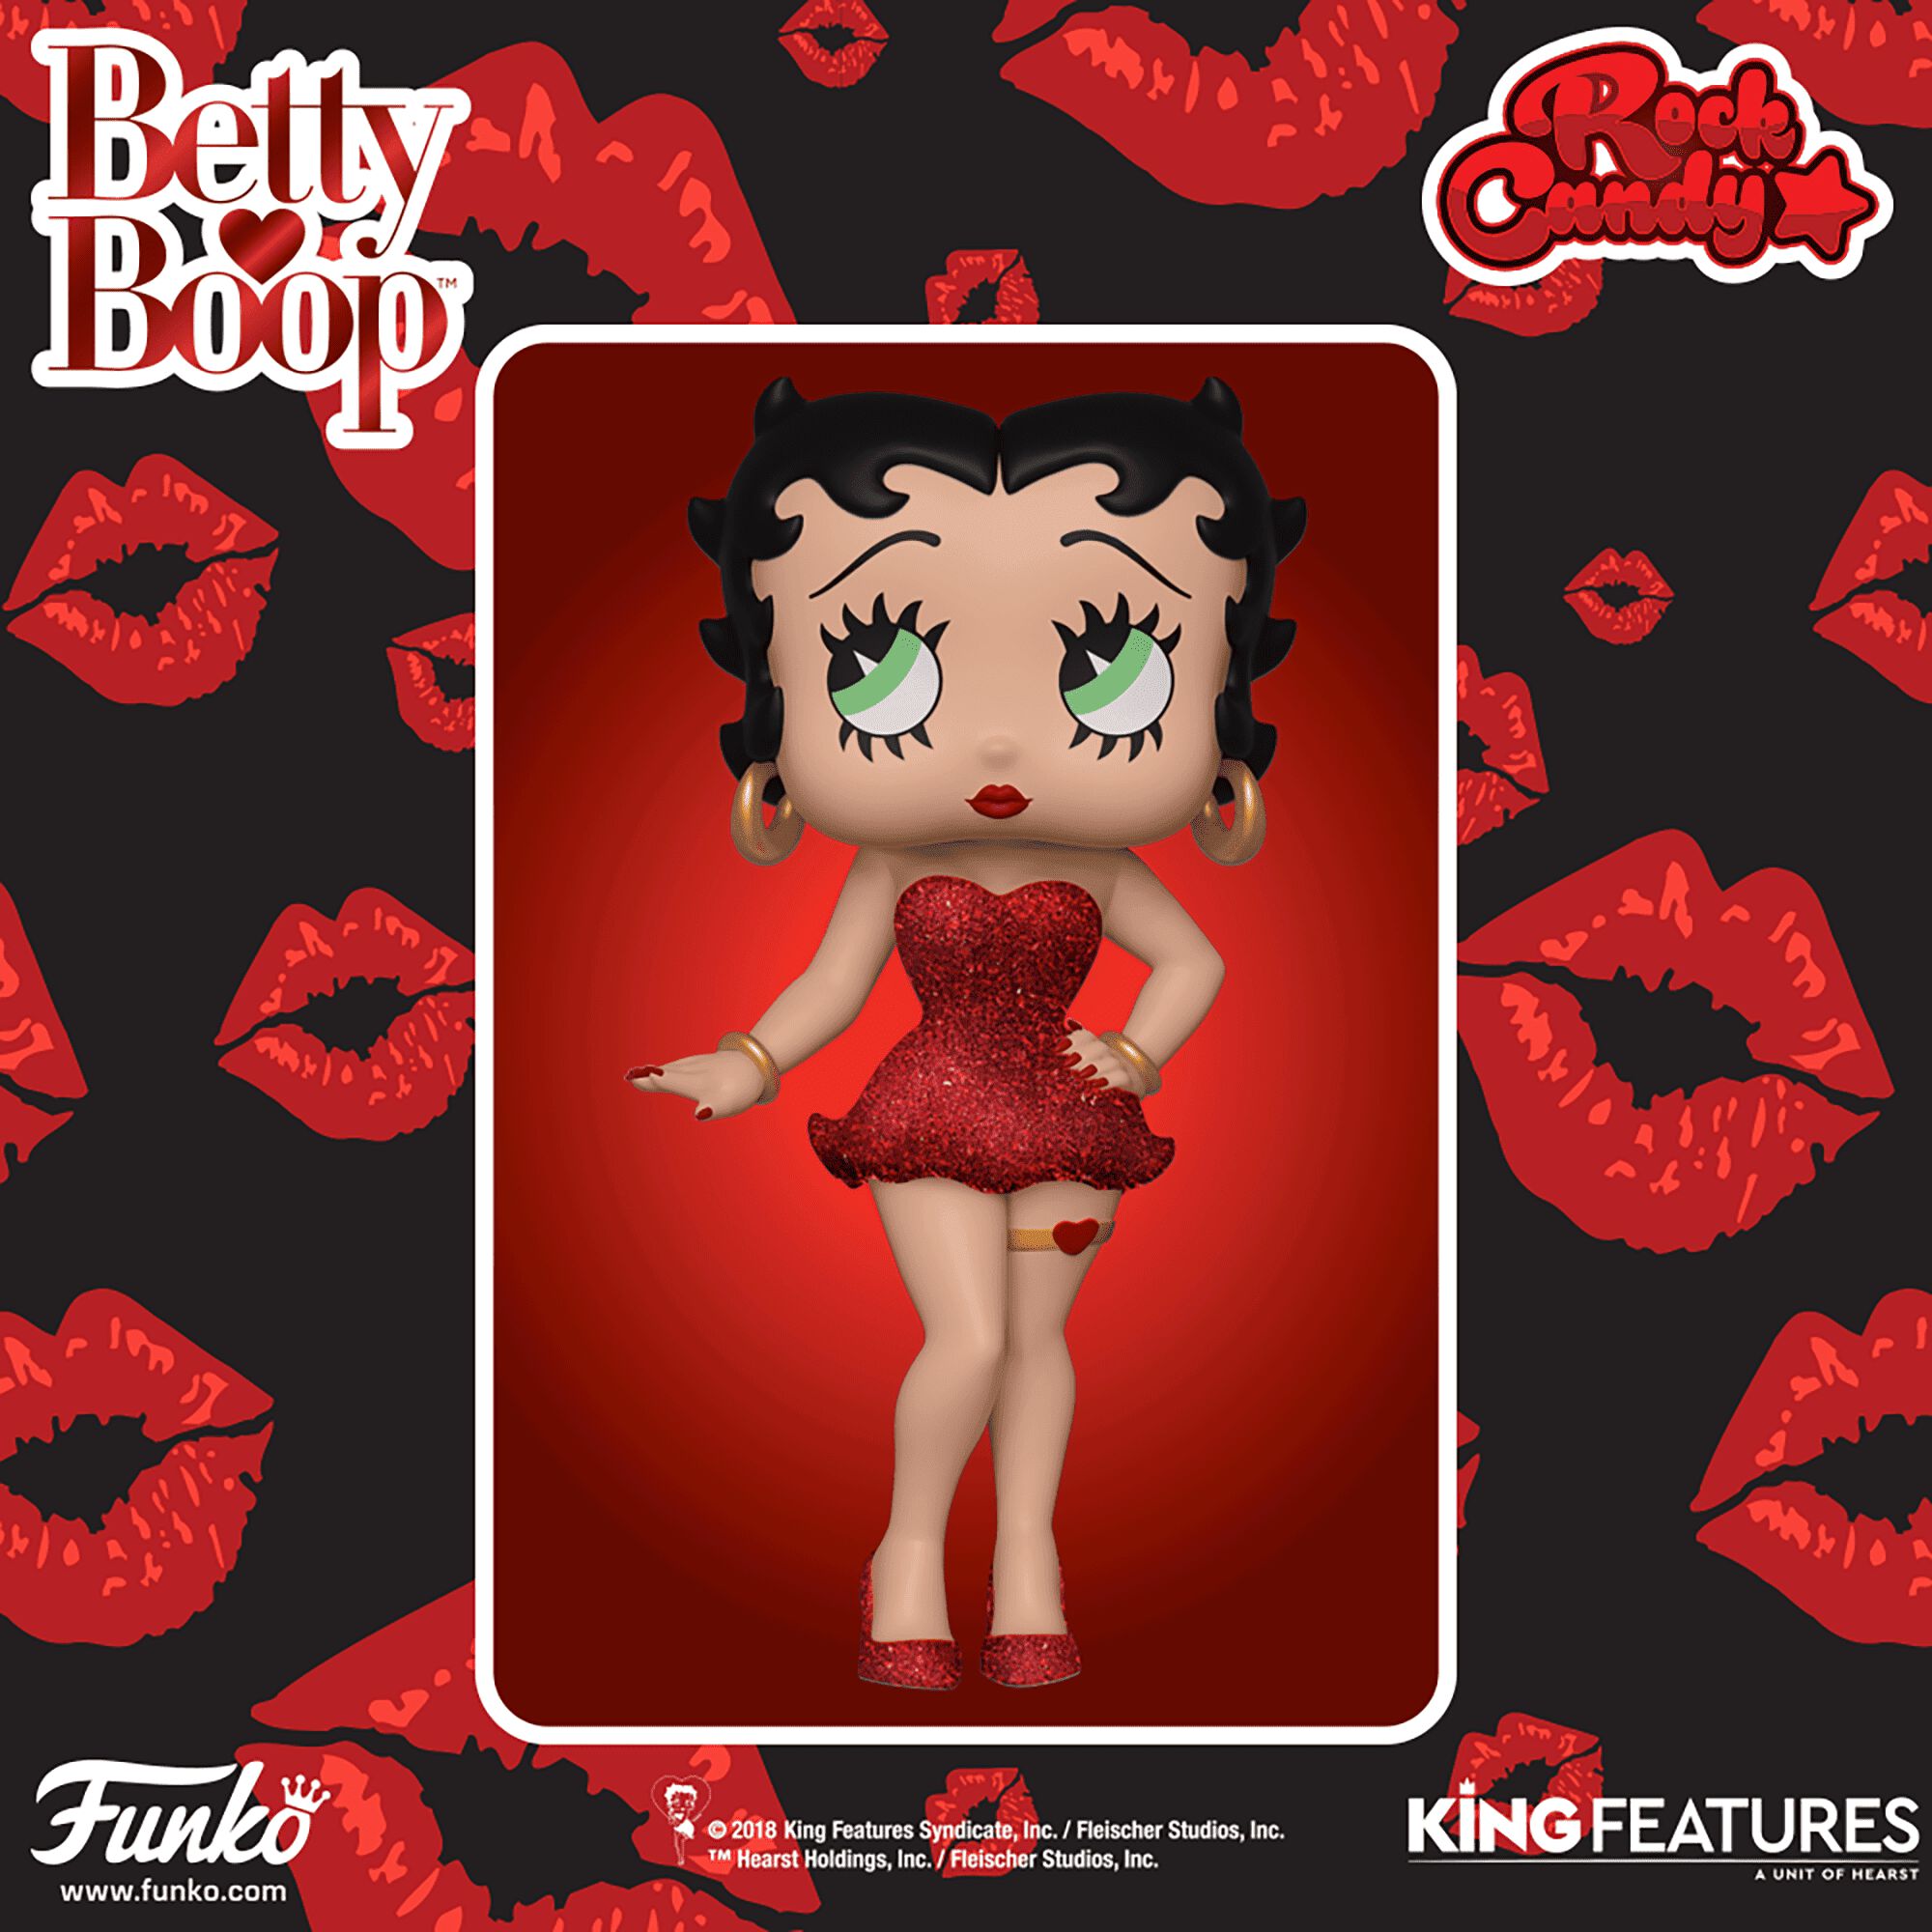 Coming Soon: Betty Boop™ Rock Candy & Pop!